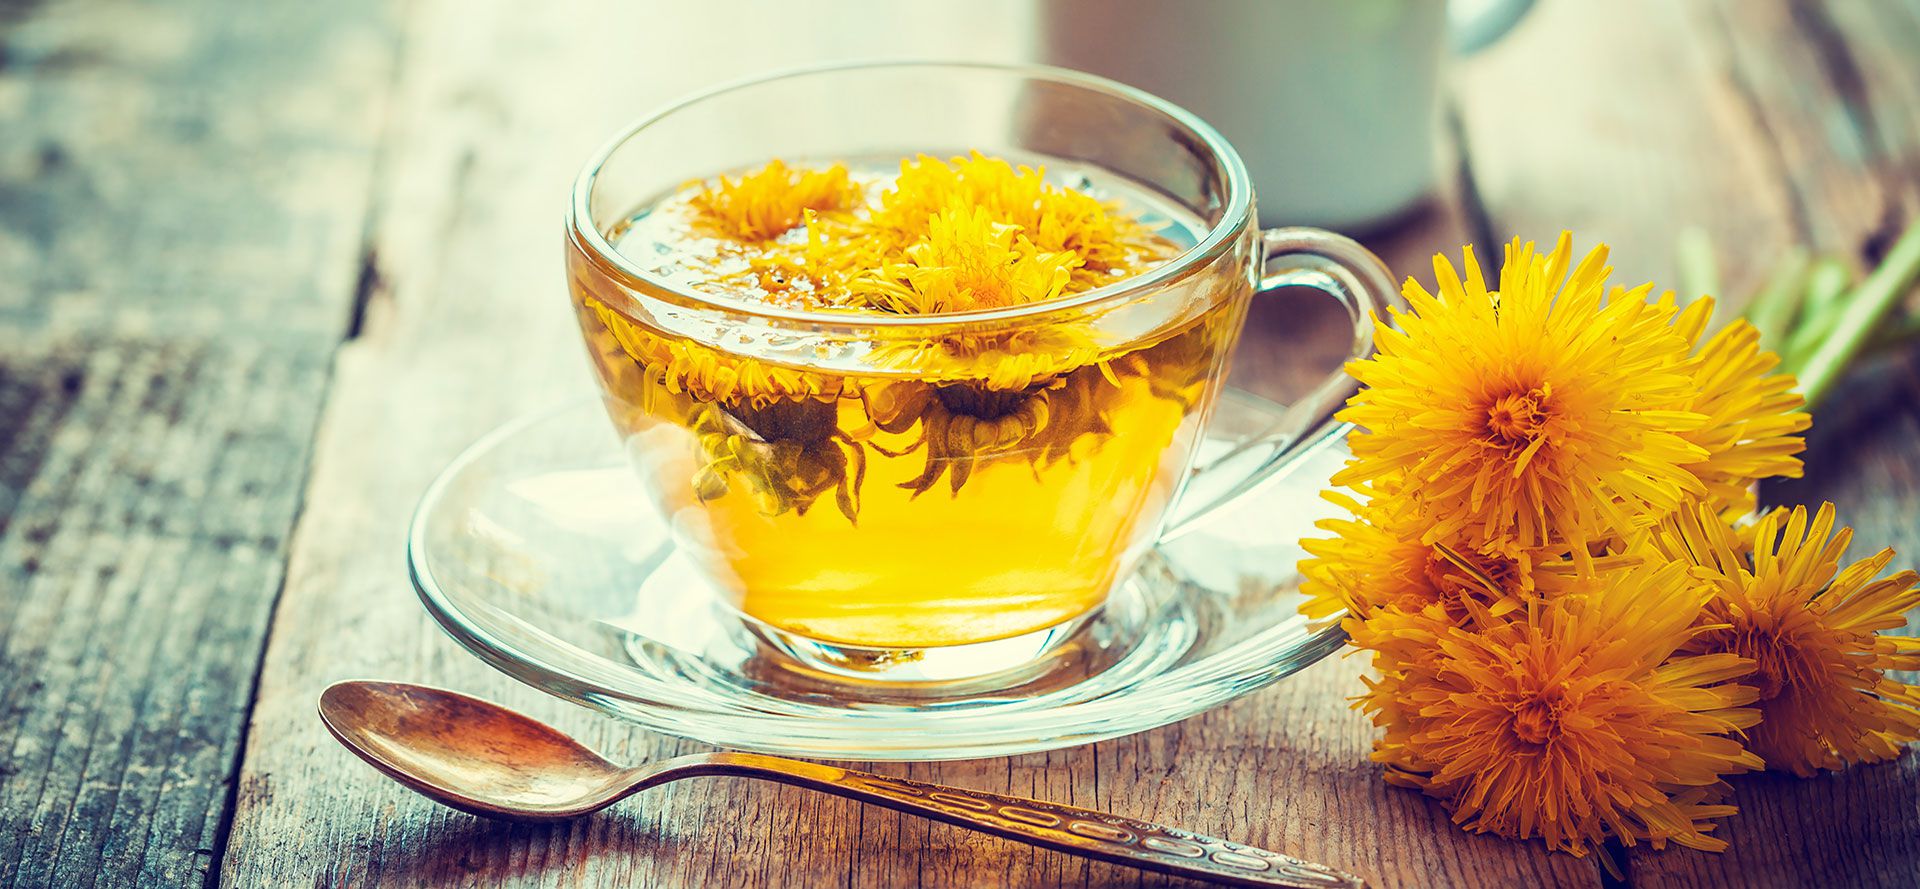 Dandelion tea in a cup